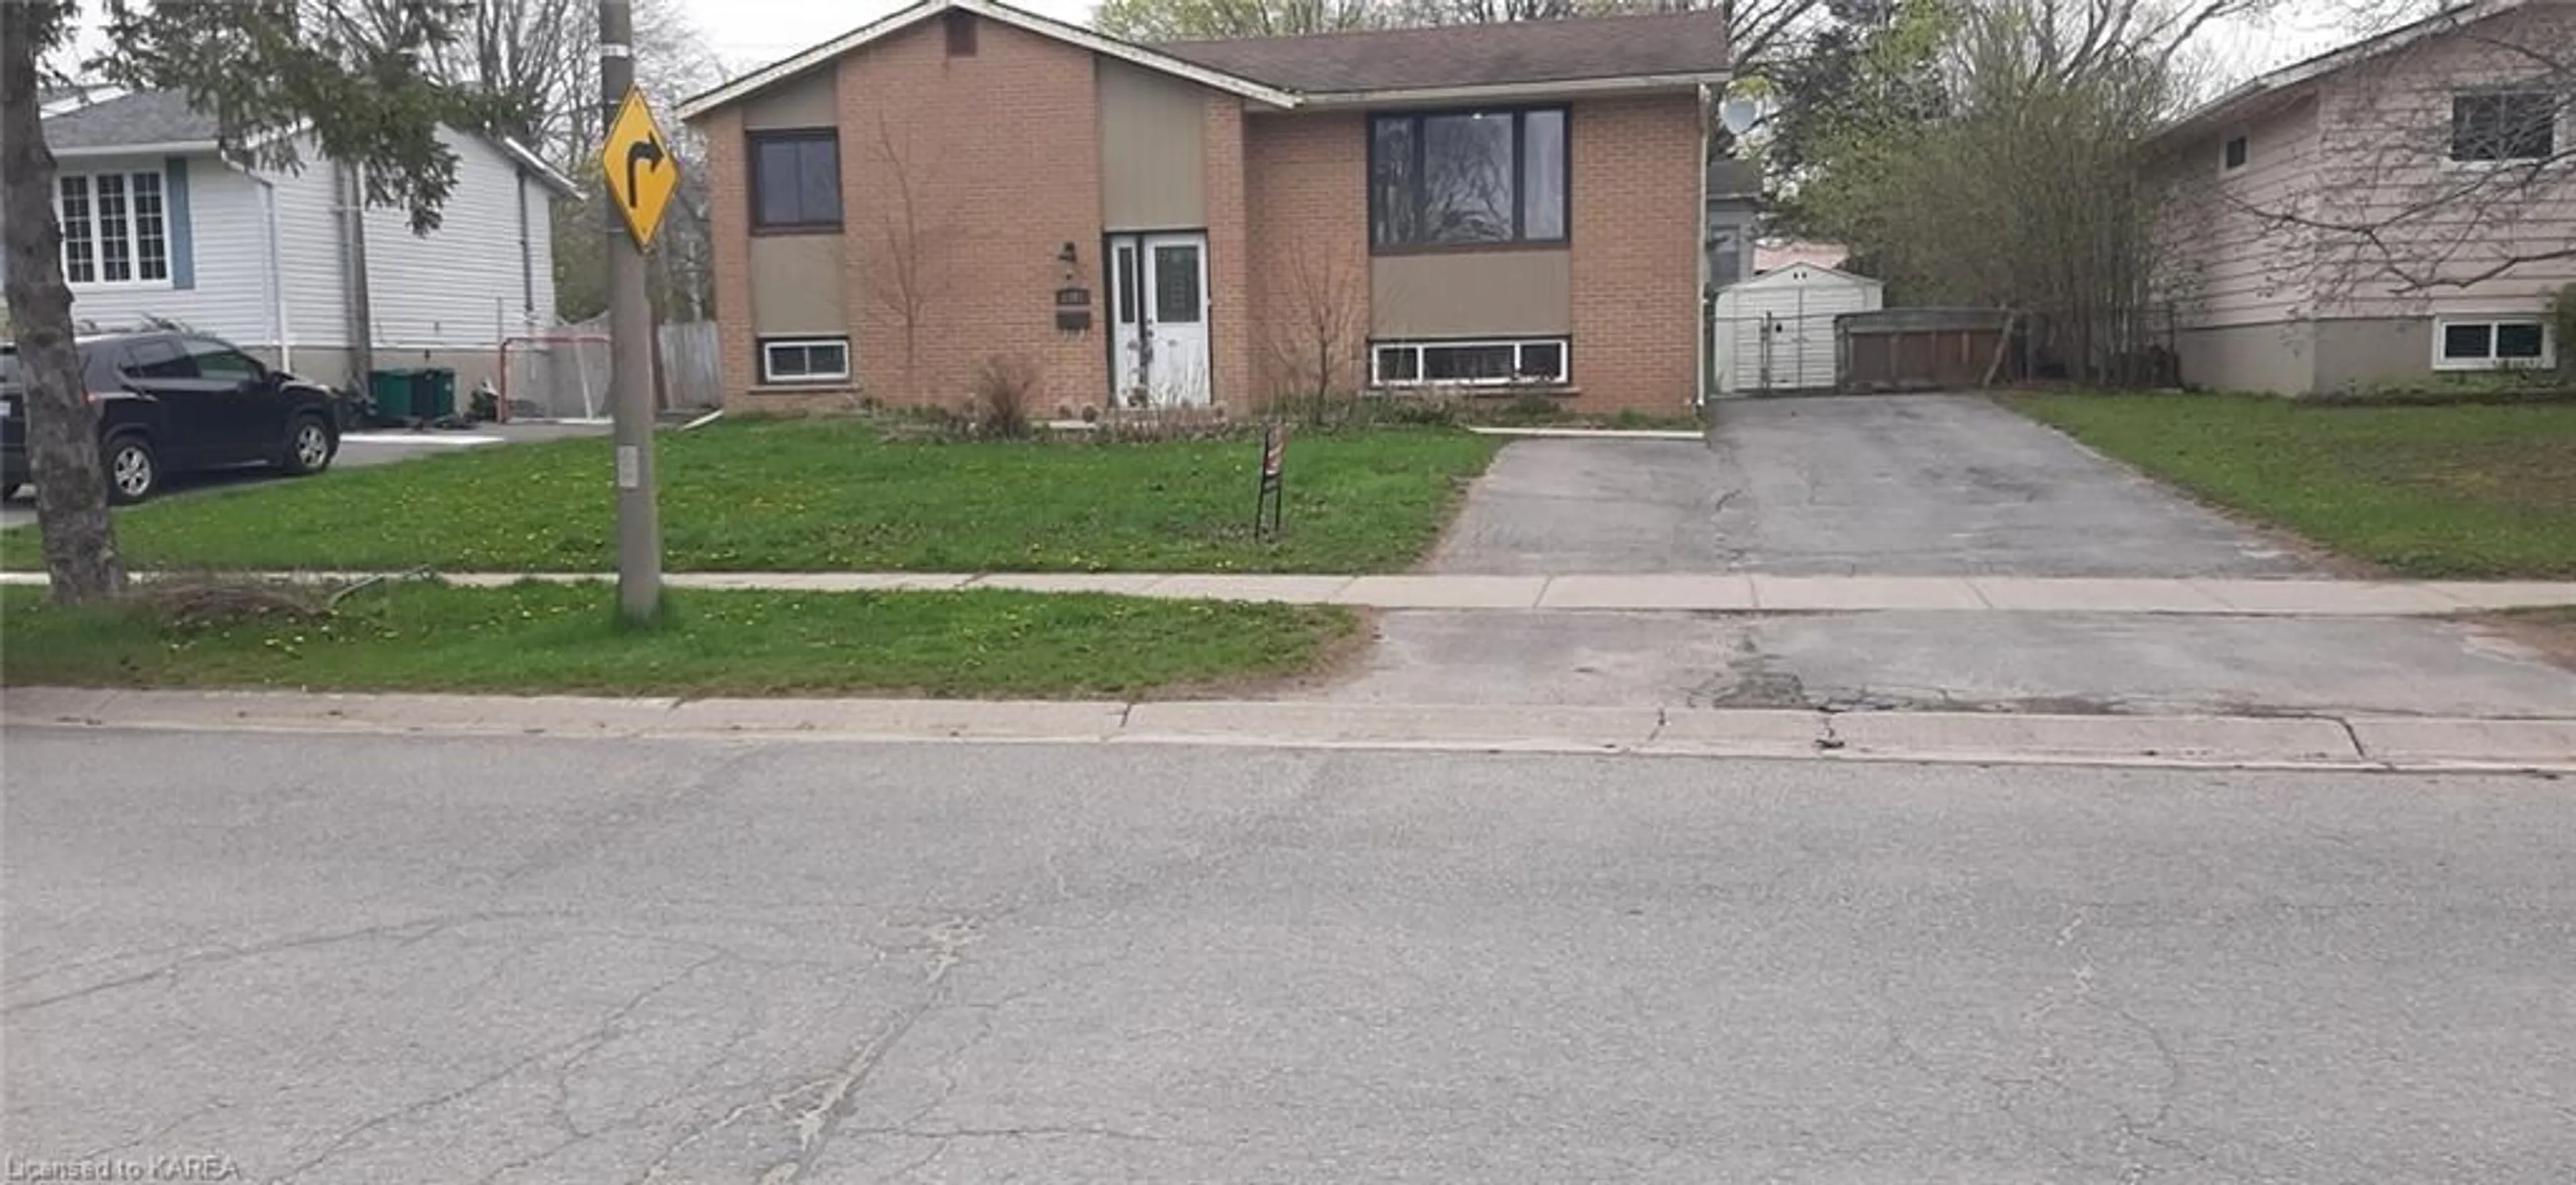 Frontside or backside of a home for 1367 Waverley Cres, Kingston Ontario K7M 6J8